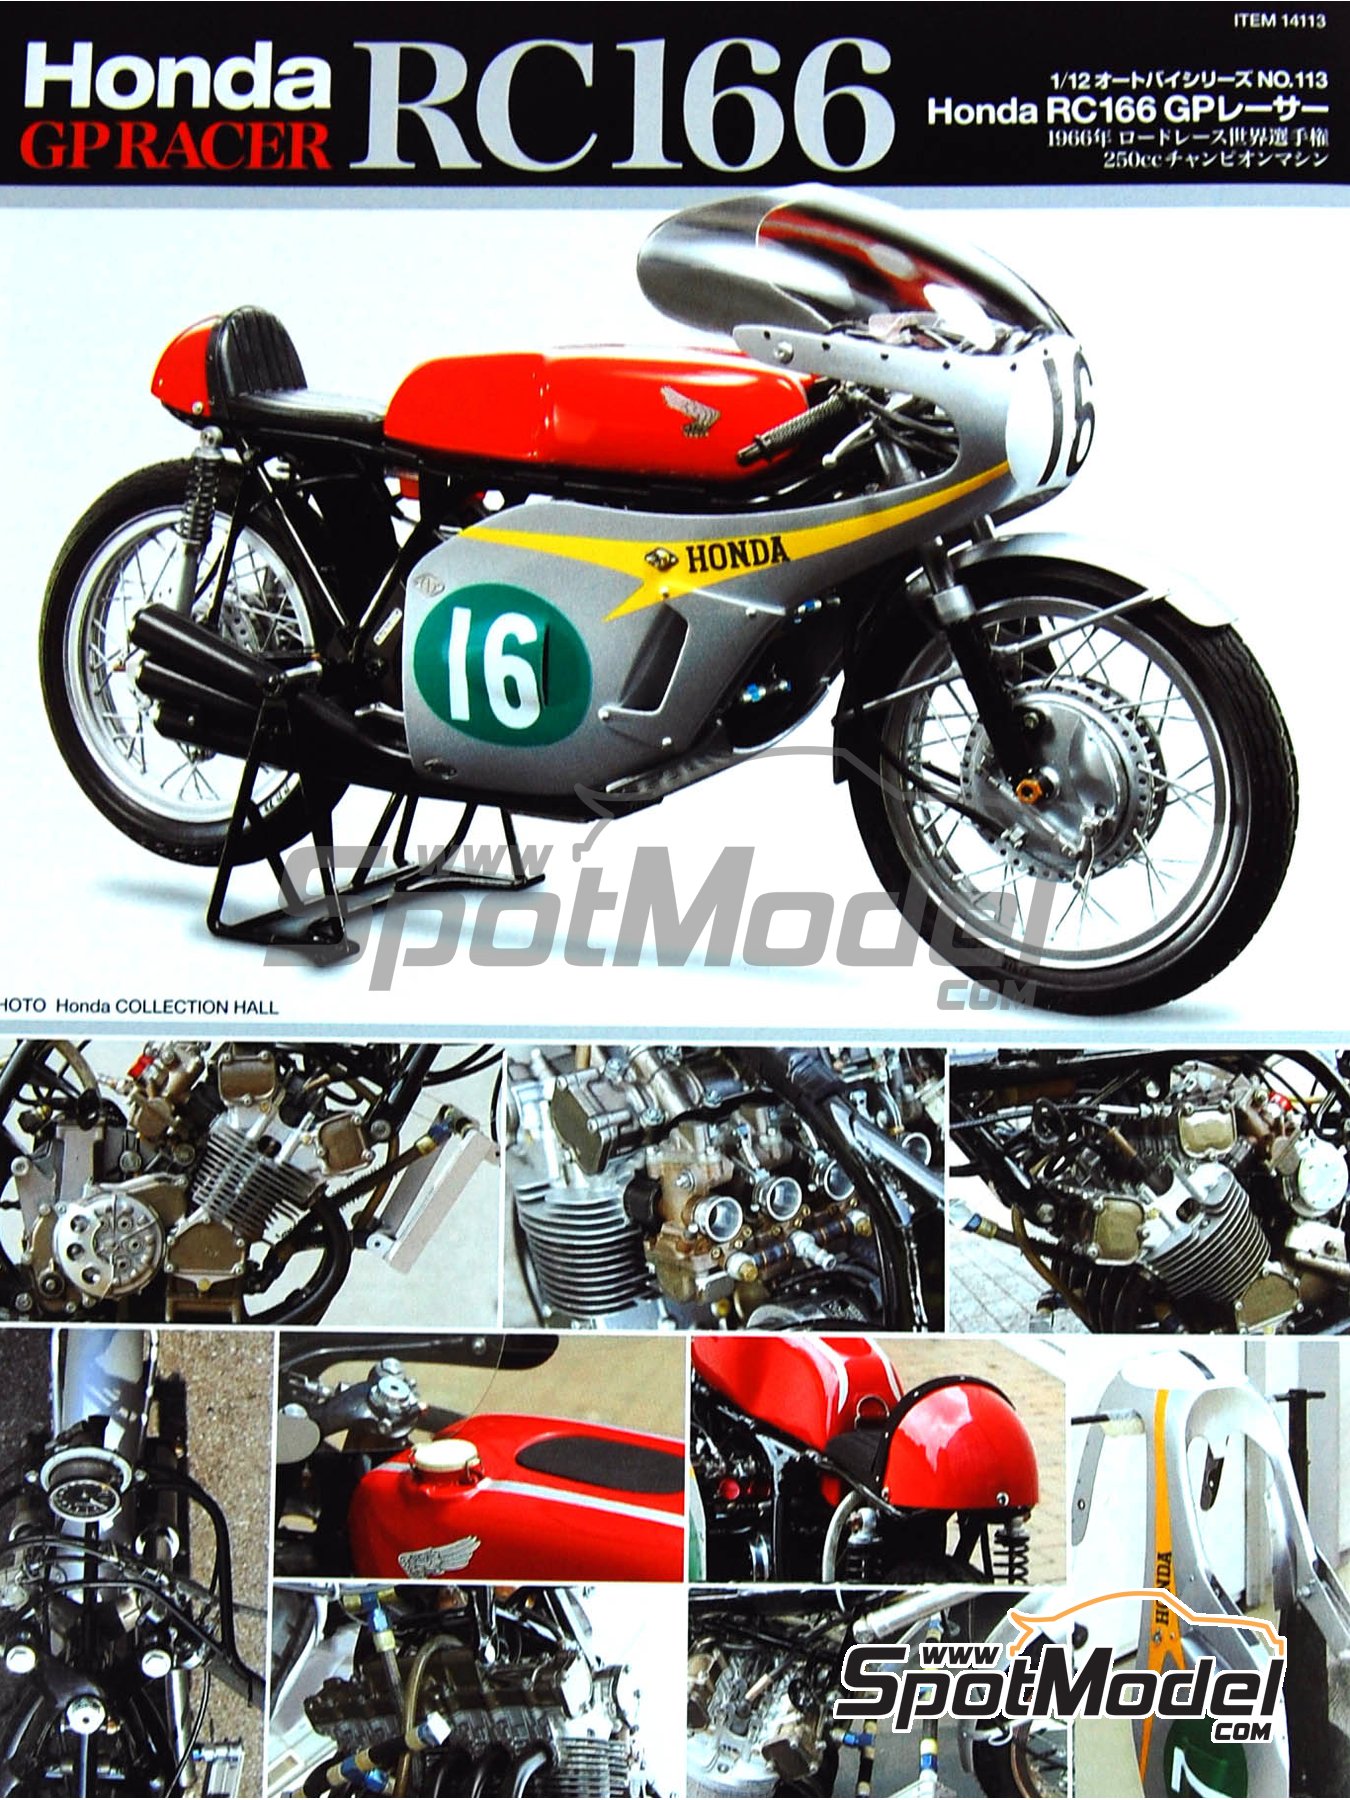 Tamiya 12631 Honda Rc166 Wheel Set 1/12 Scale E612 for sale online 